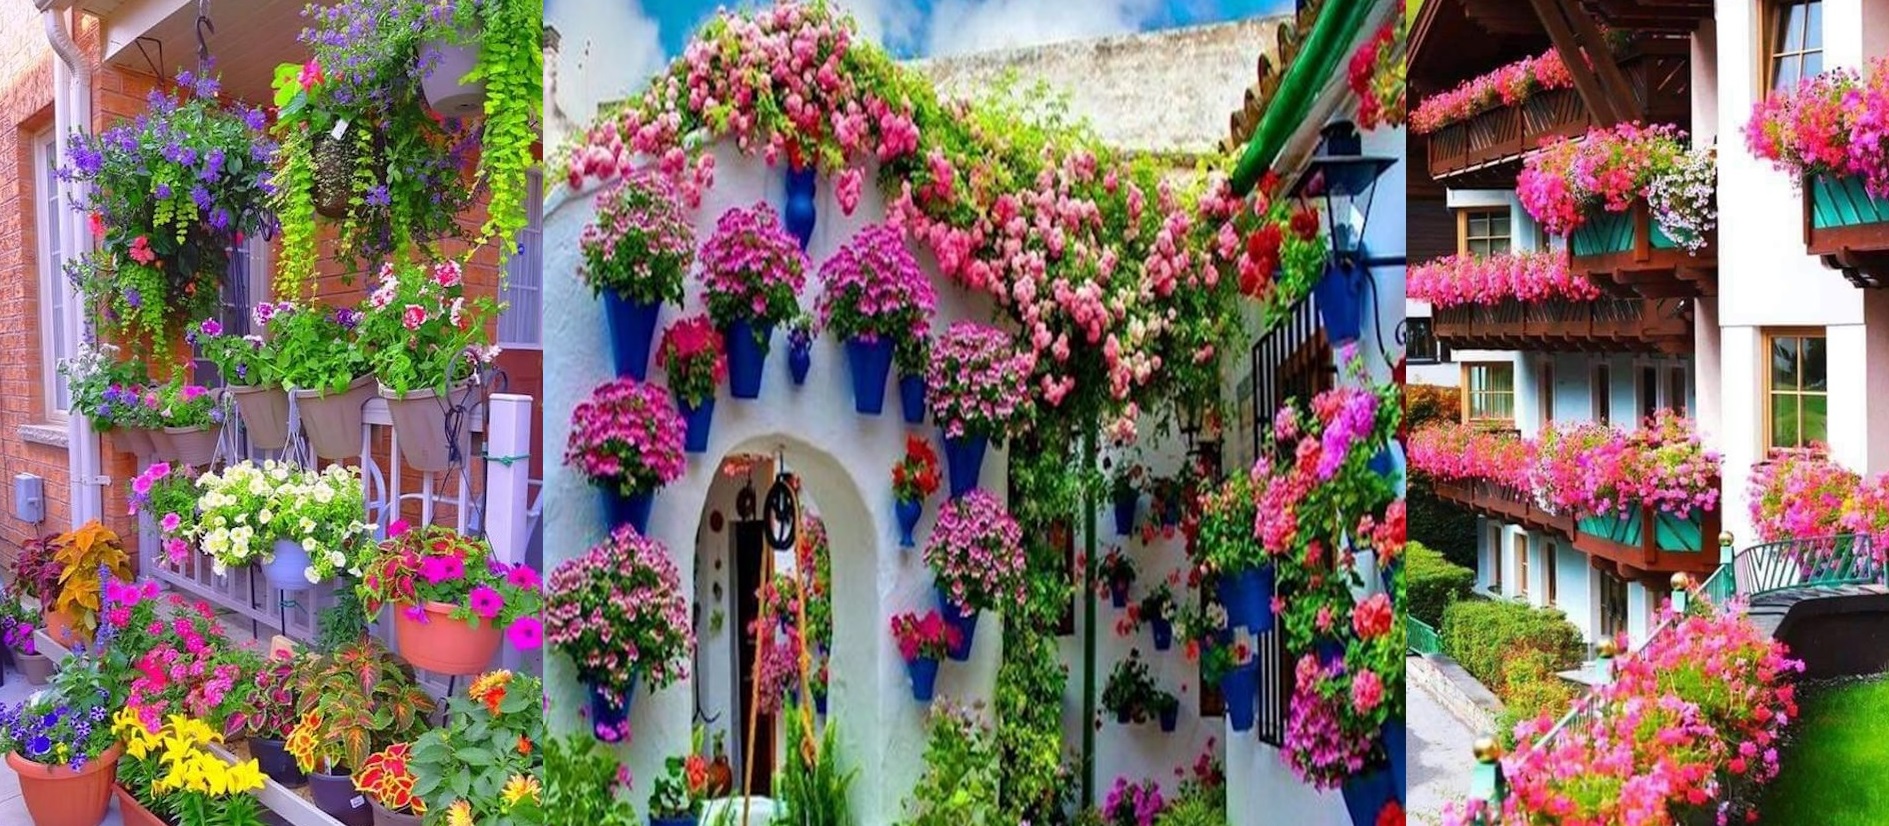 Decoreza fatada casei tale cu flori spectaculoase. Flori colorate care infloresc toata vara si care iti fac casa si mai frumoasa